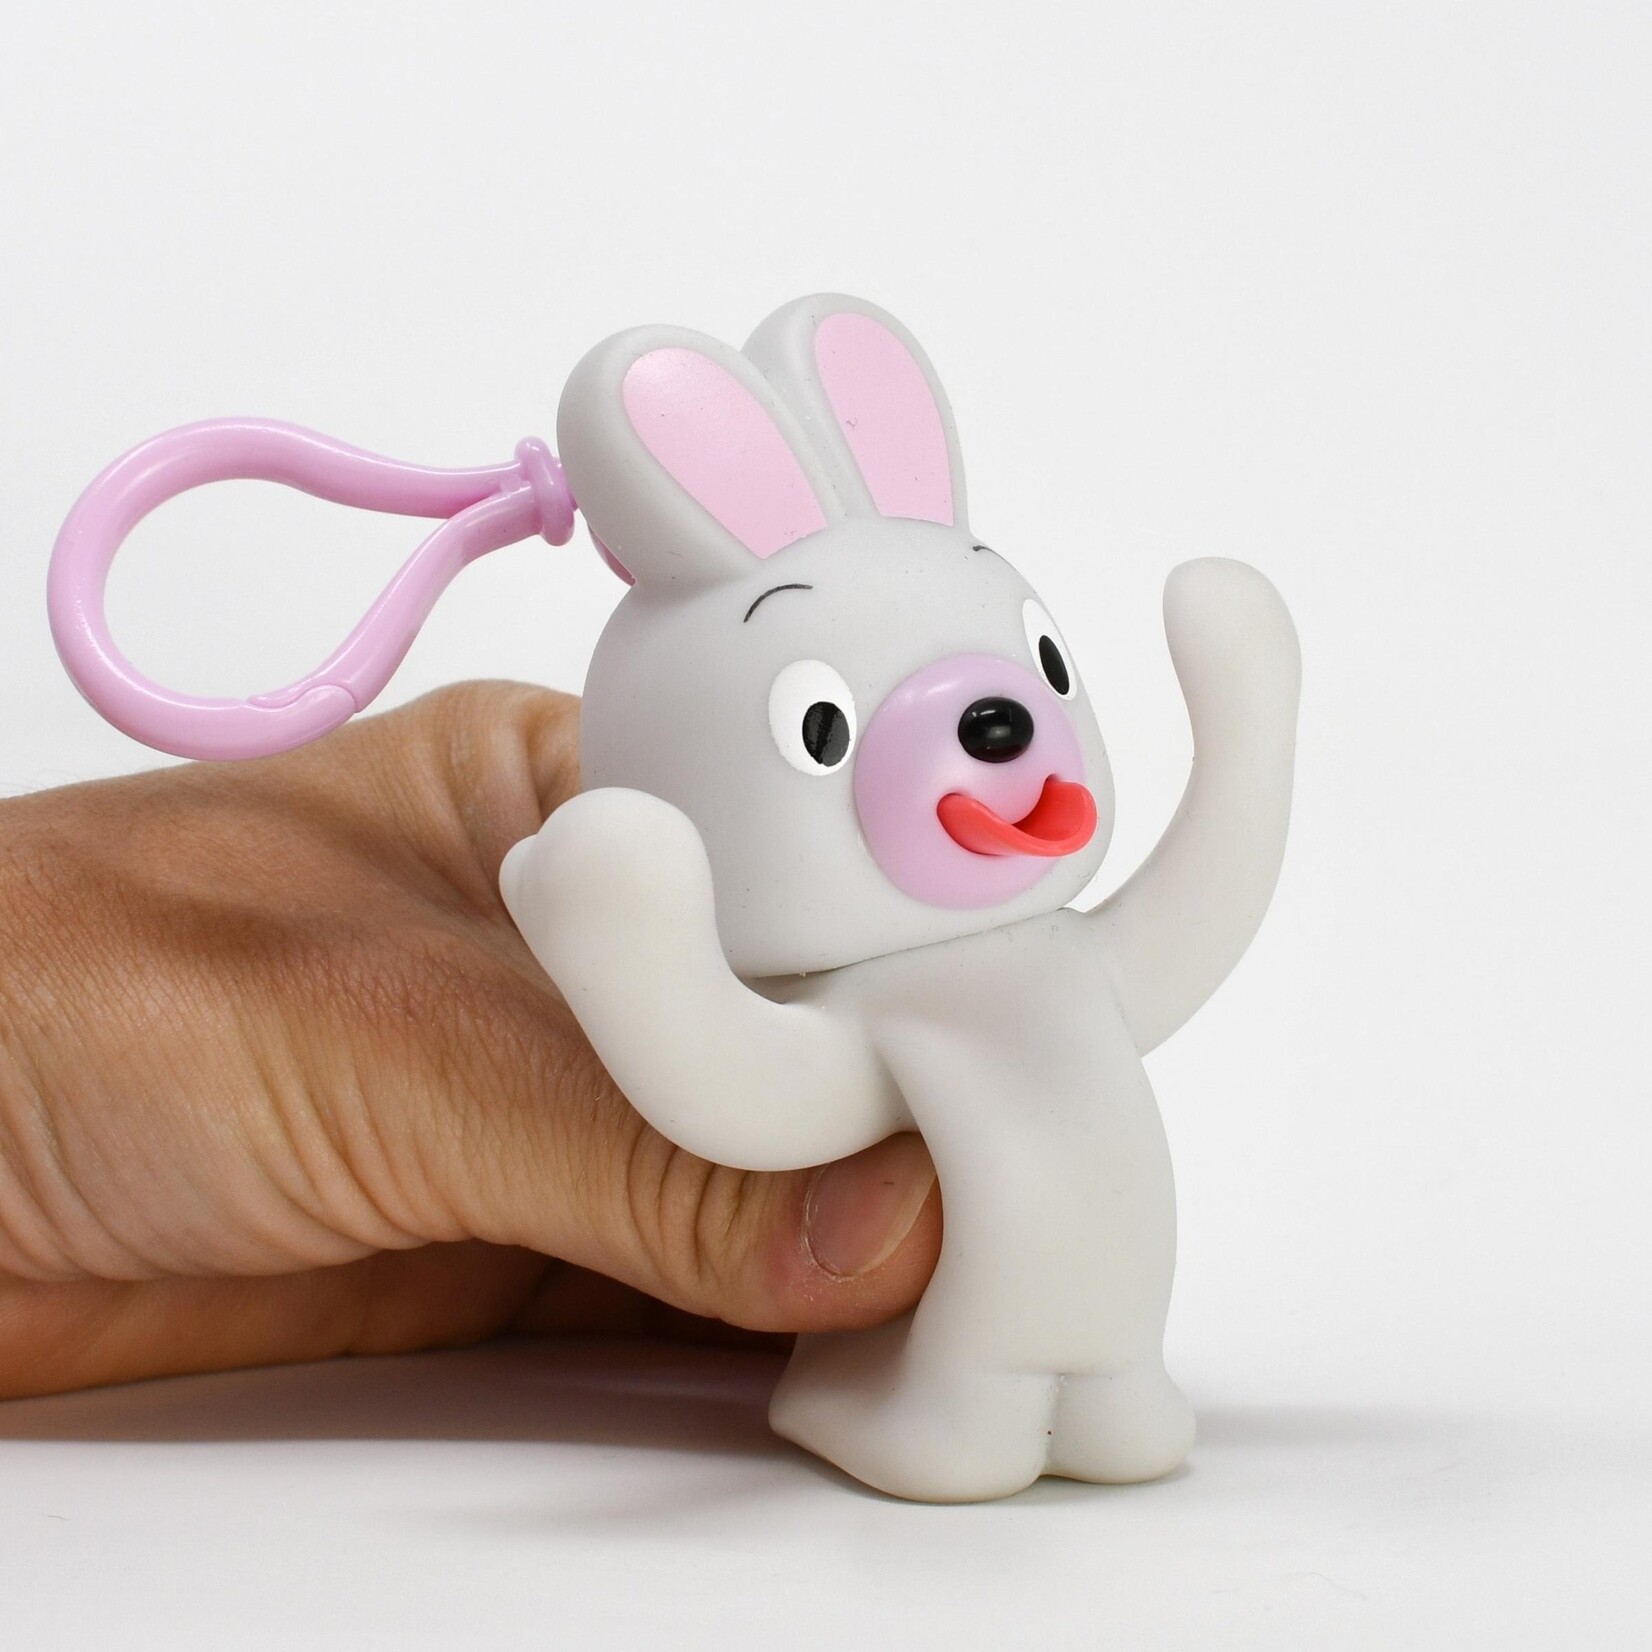 Sankyo Toys/JabberBall Jabb-a-Boo Bunny